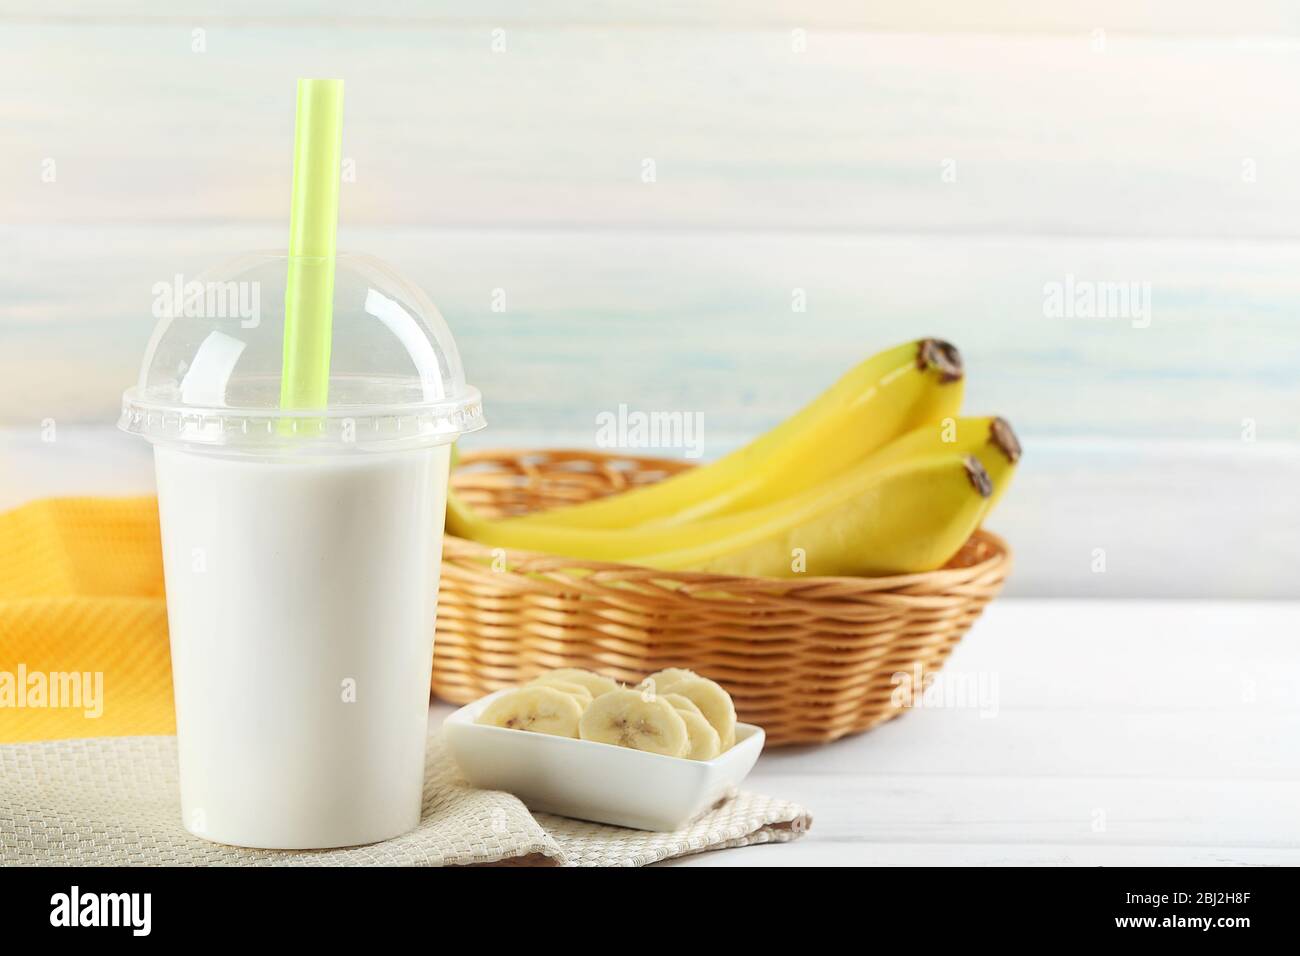 https://c8.alamy.com/comp/2BJ2H8F/plastic-cup-of-milkshake-with-banana-on-color-wooden-background-2BJ2H8F.jpg